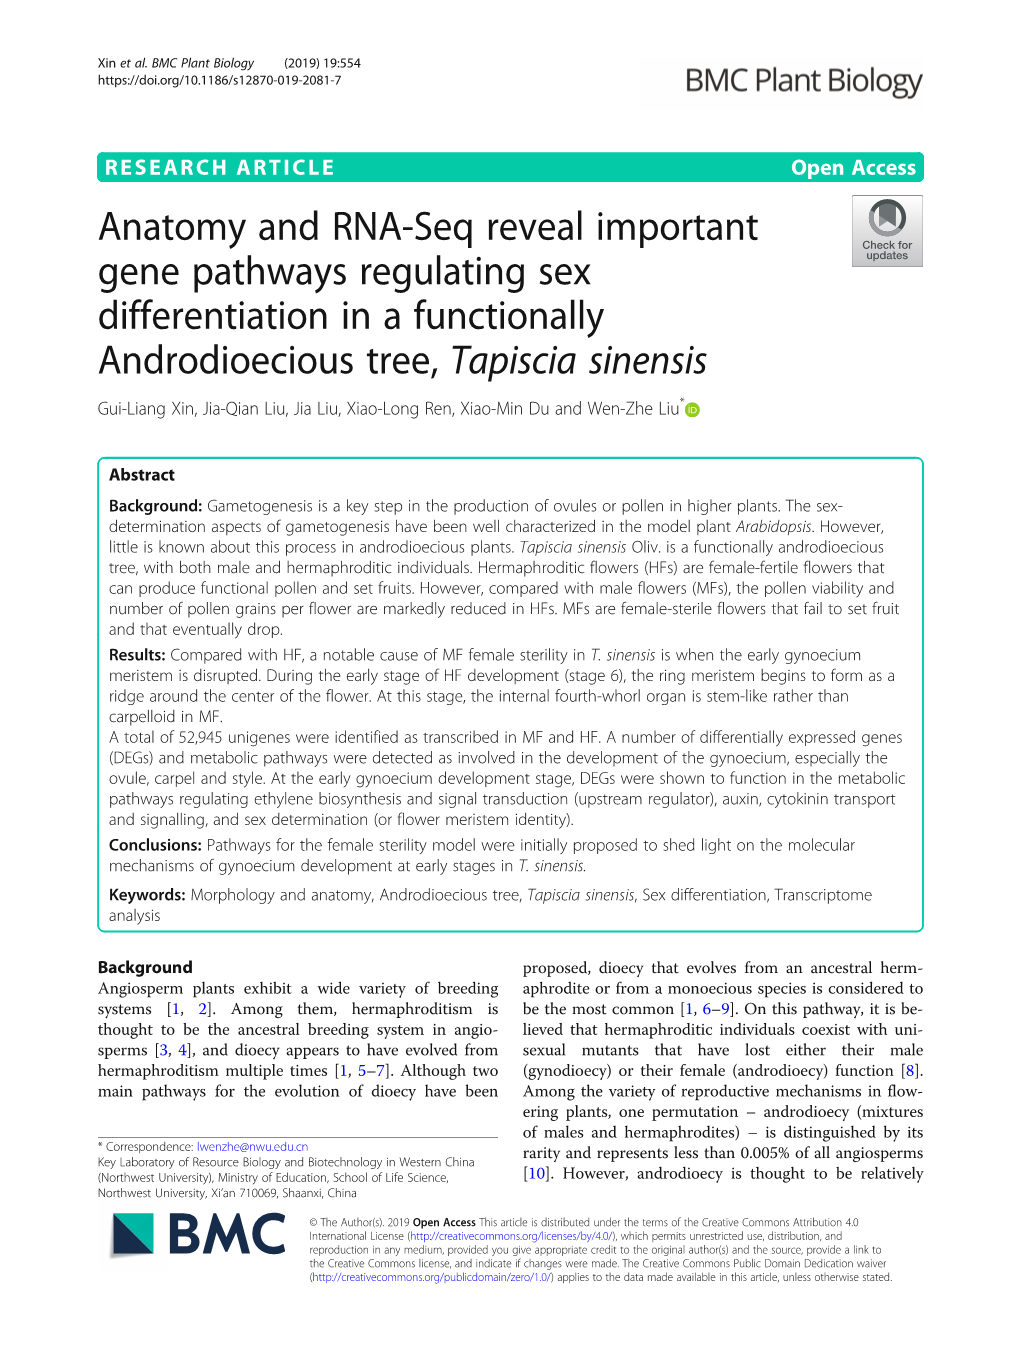 Anatomy and RNA-Seq Reveal Important Gene